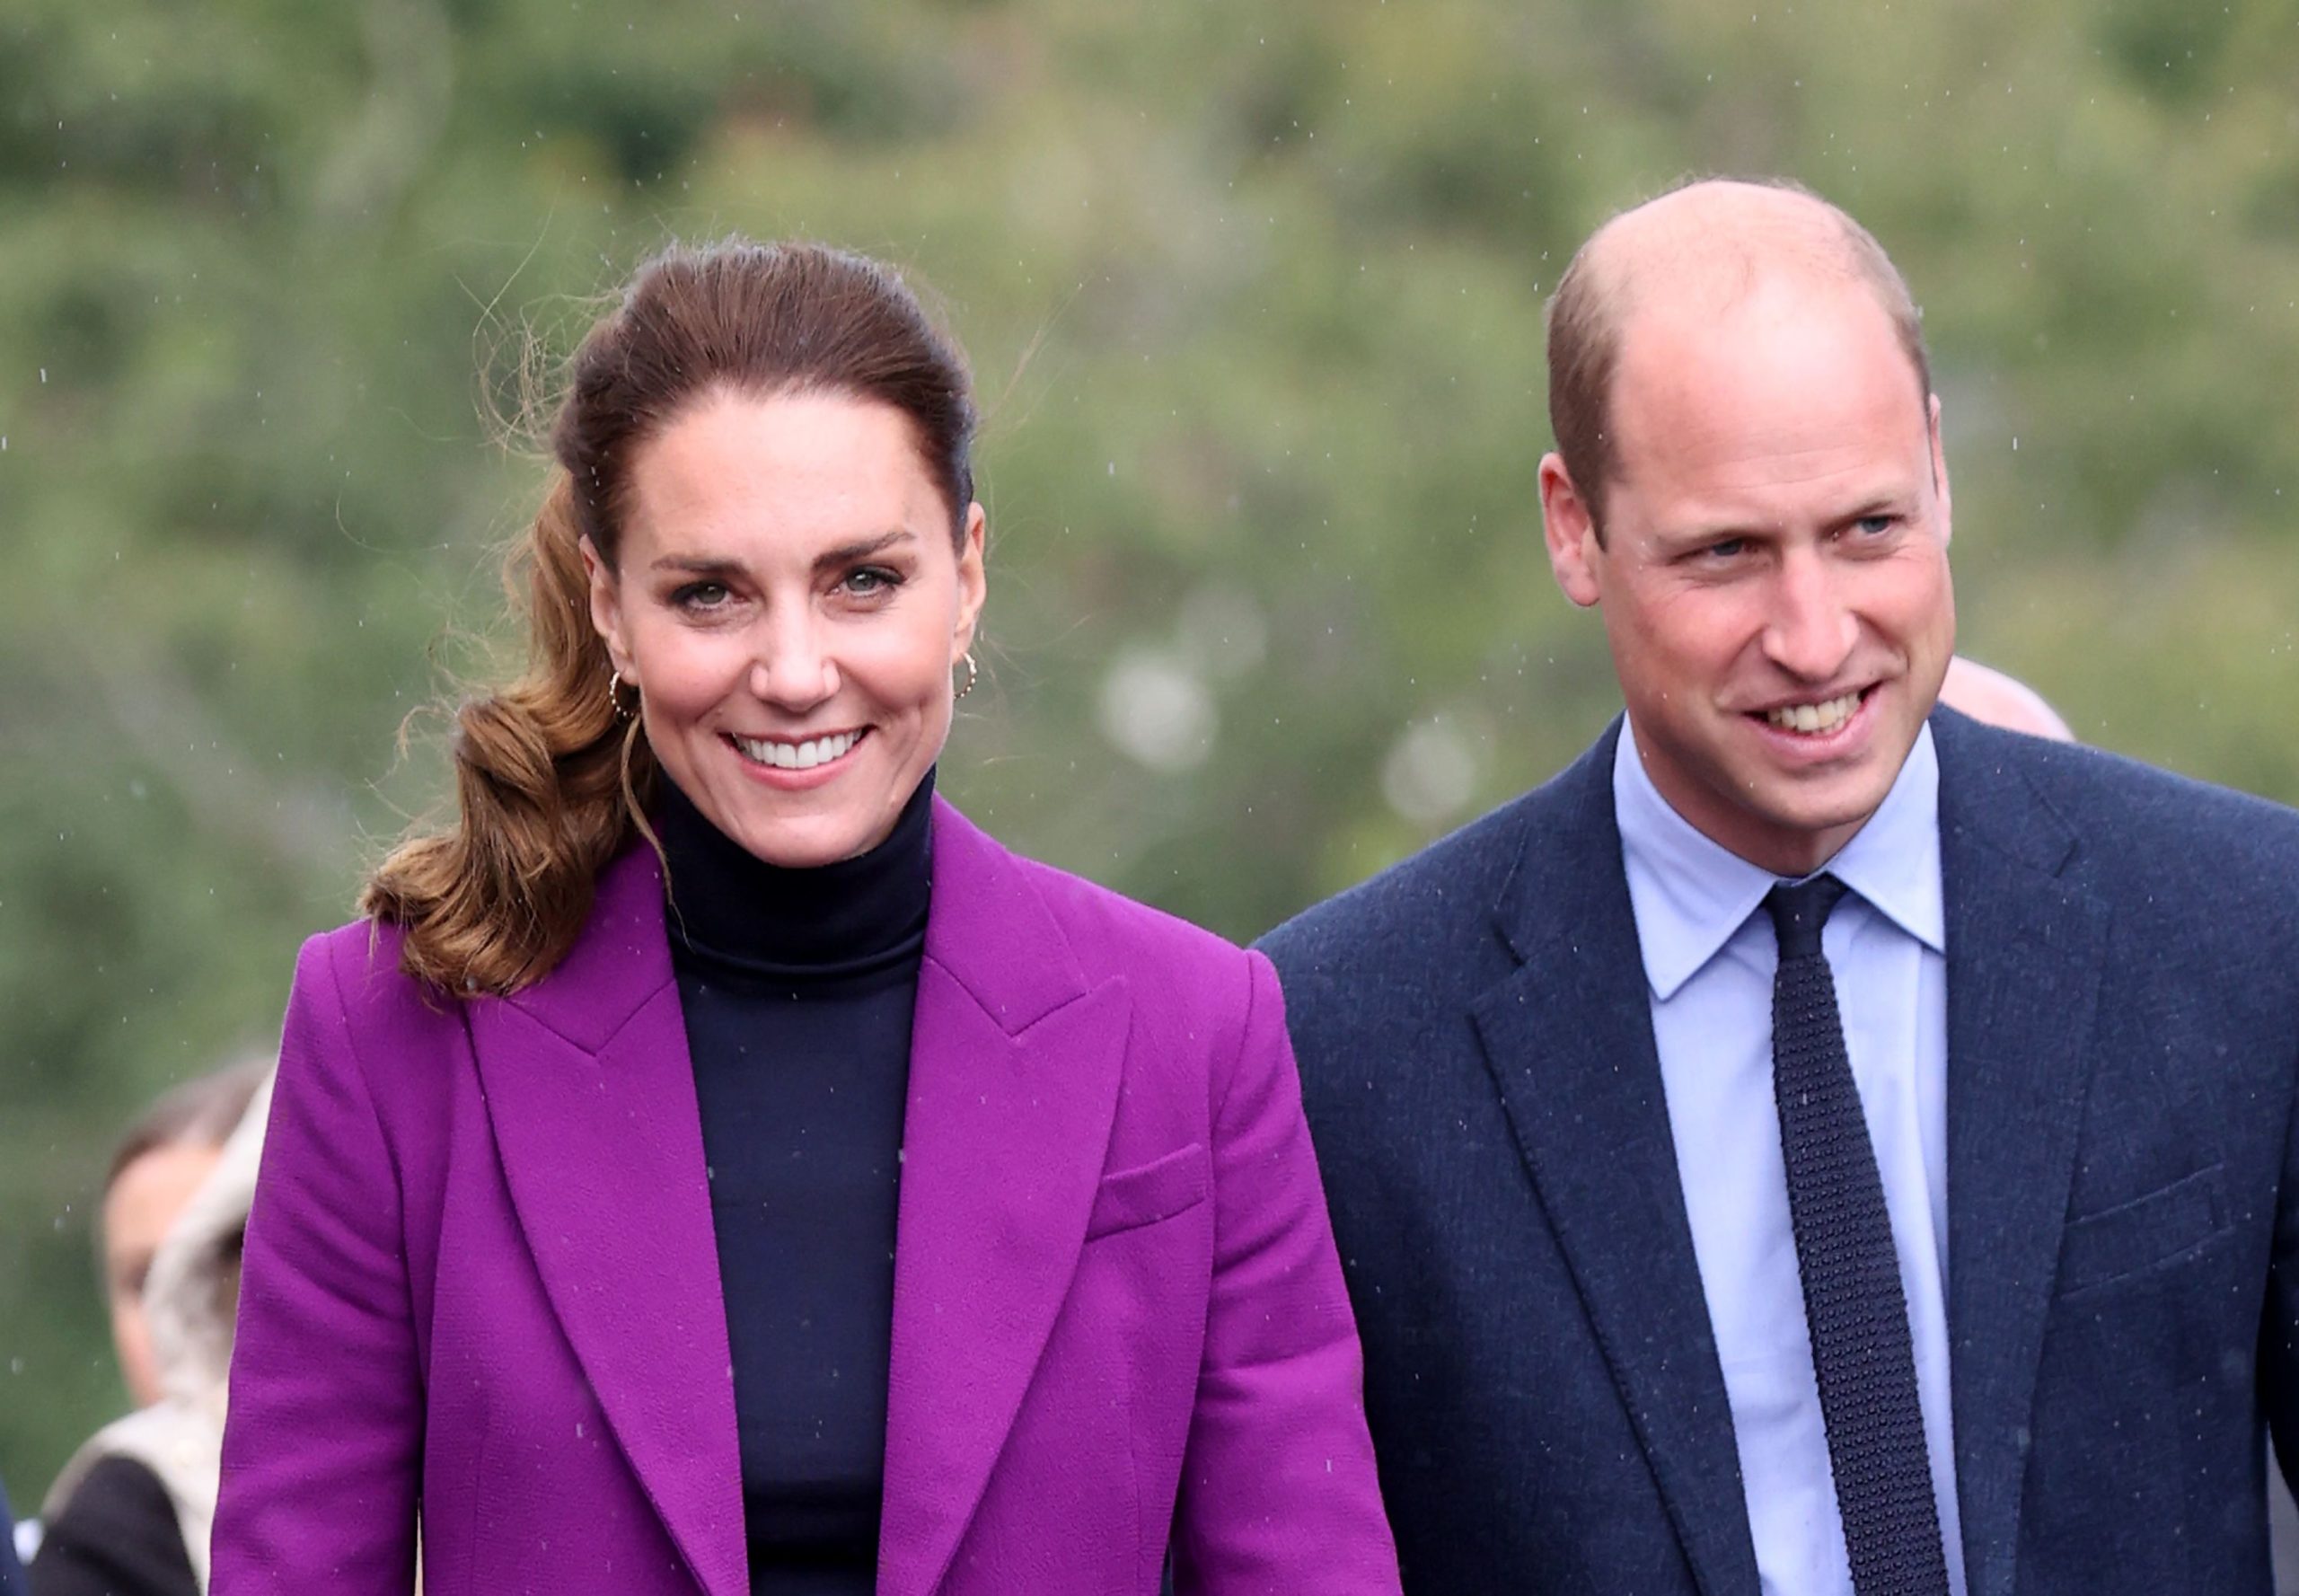 Prince Williams and Kate Middleton